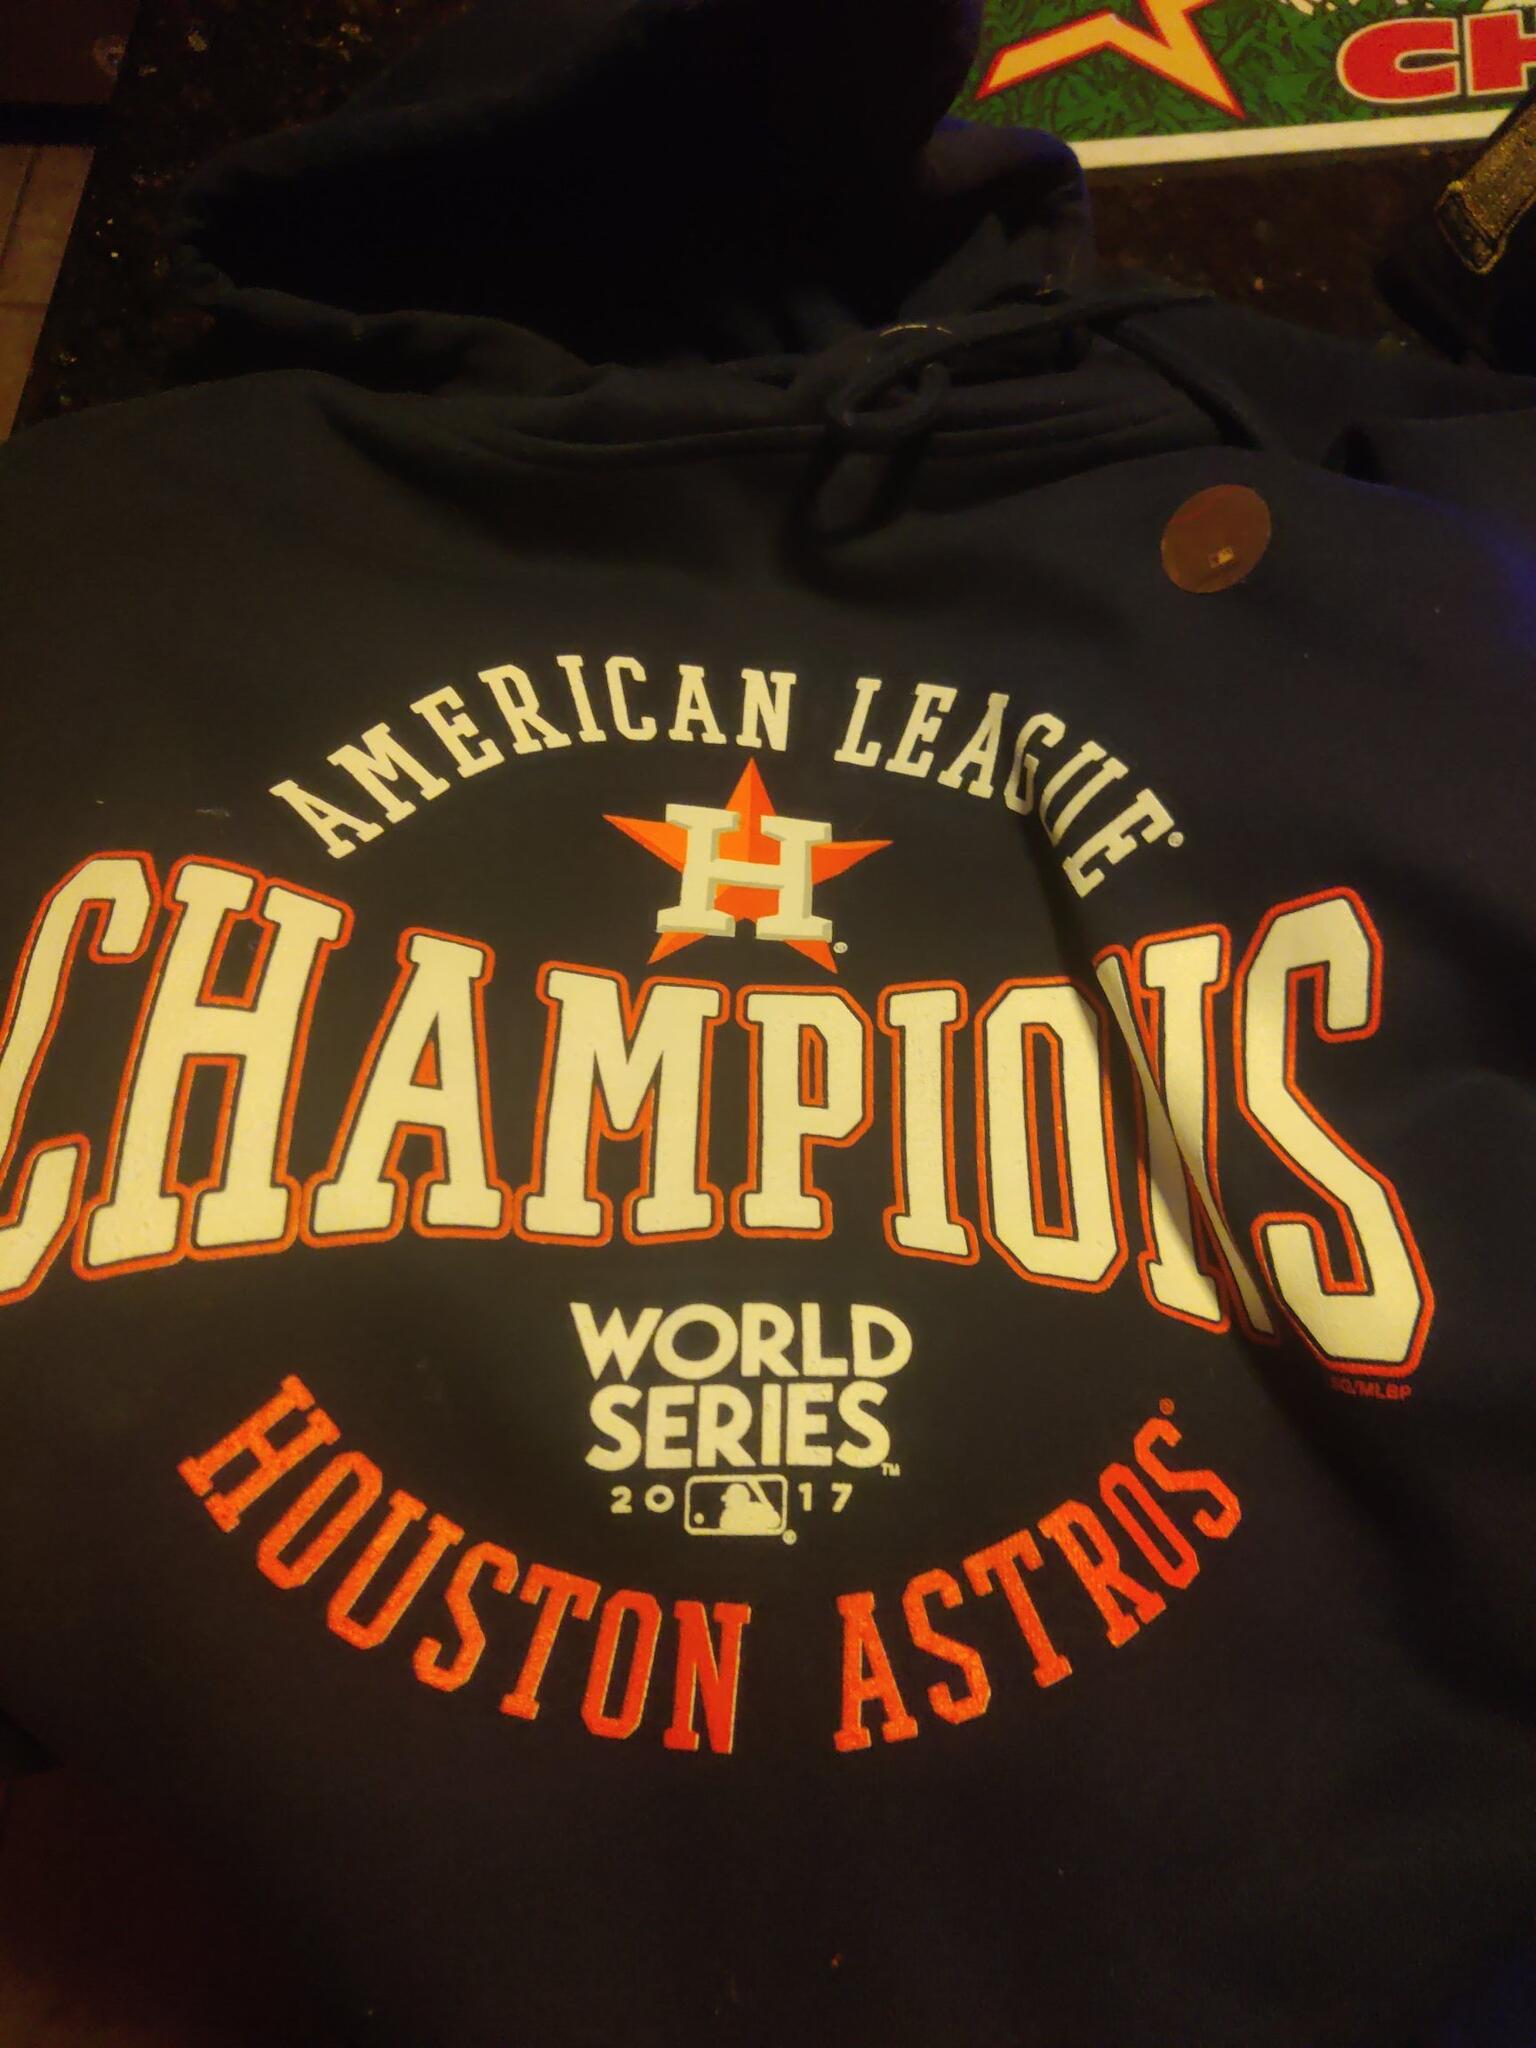 Houston Astros 713 Shirt and Hoodie - Skullridding